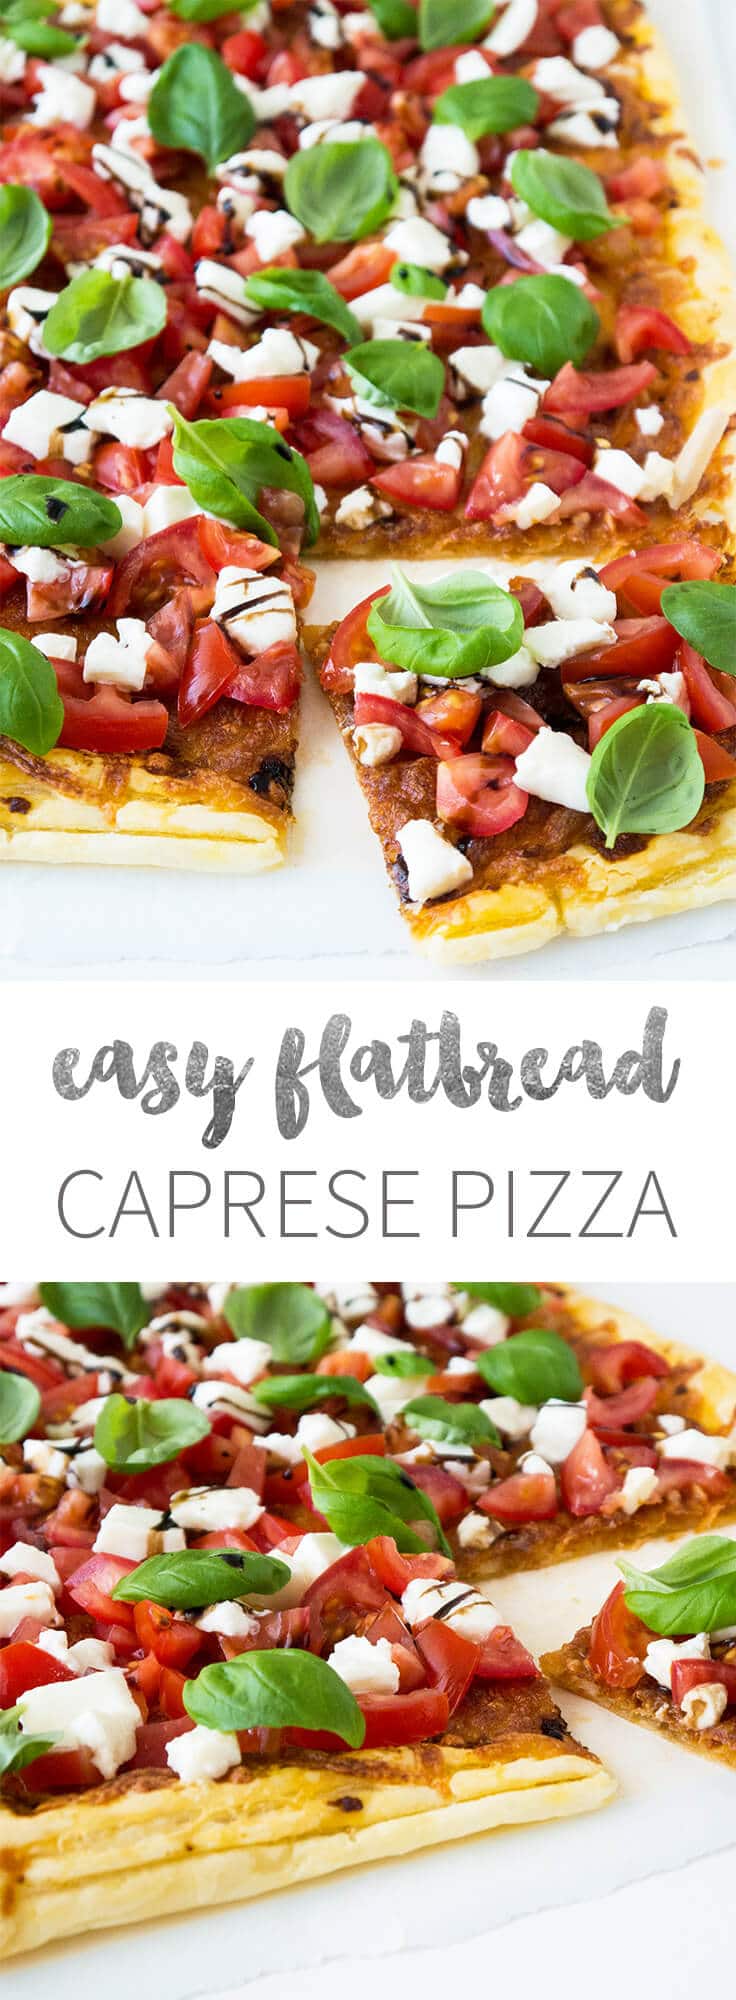 Easy Flatbread Caprese Pizza Recipe | Plated Cravings